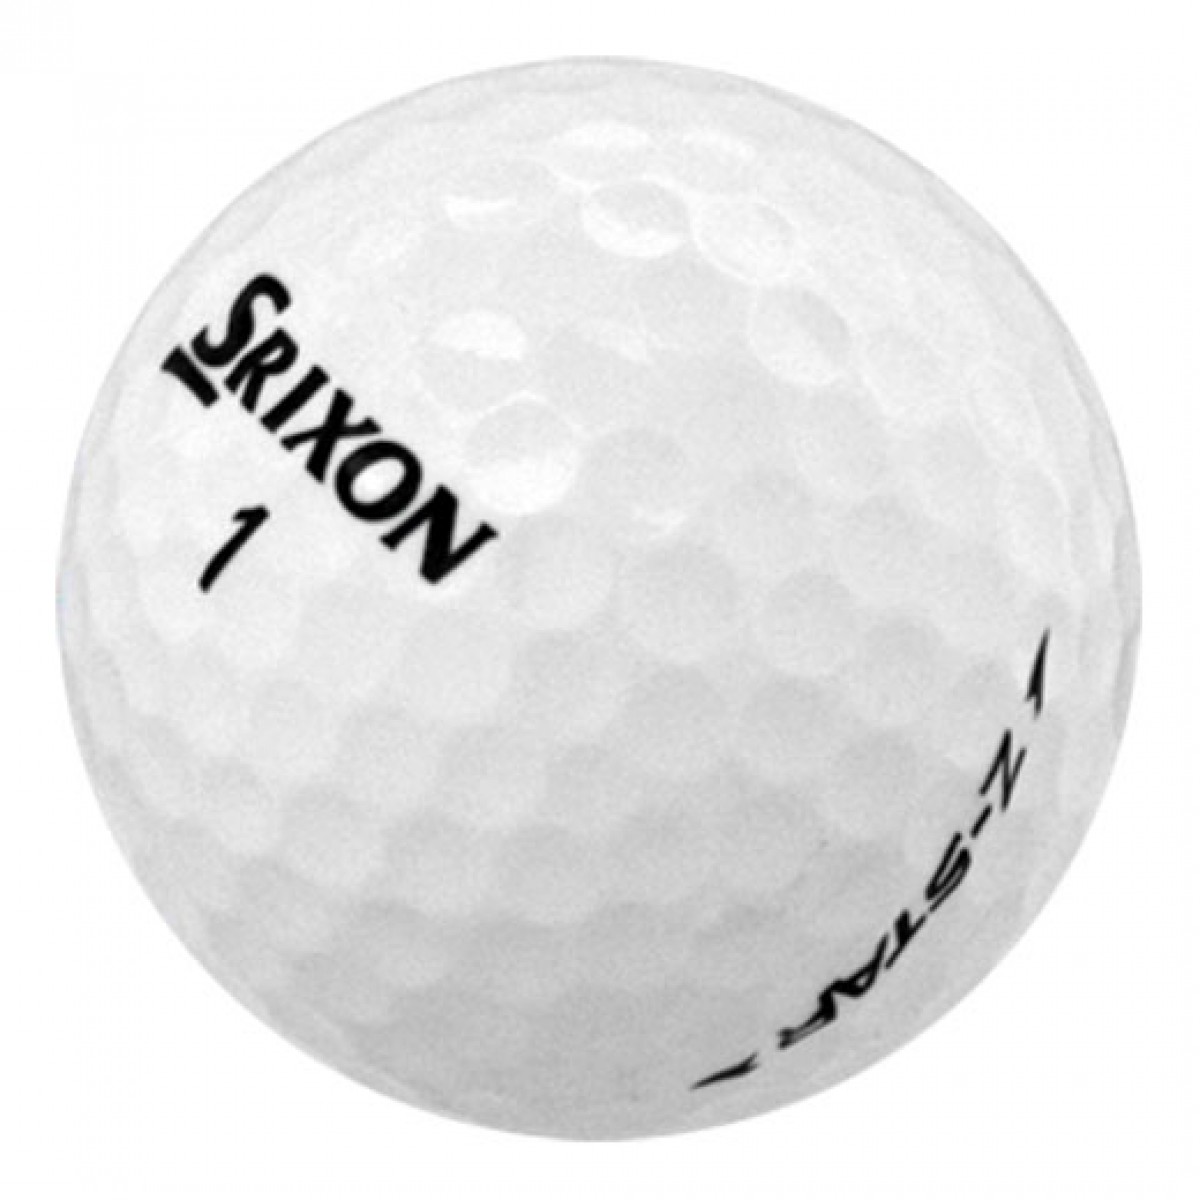 Srixon Z-Star Golf Balls, Good Quality, 50 Pack, by Hunter Golf - image 1 of 9